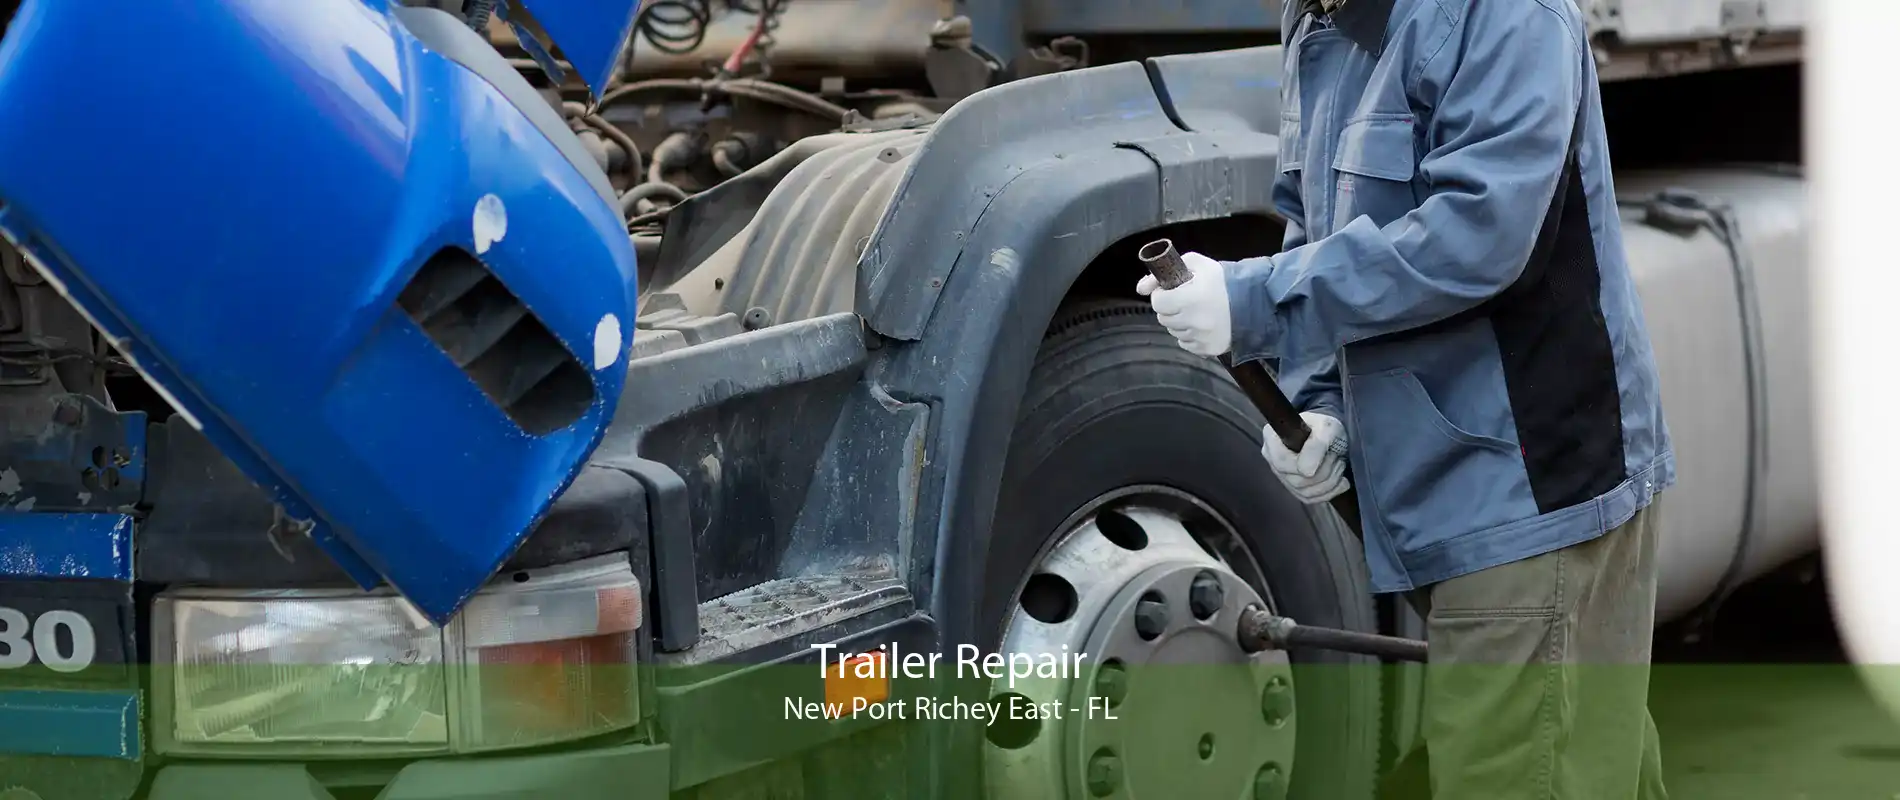 Trailer Repair New Port Richey East - FL